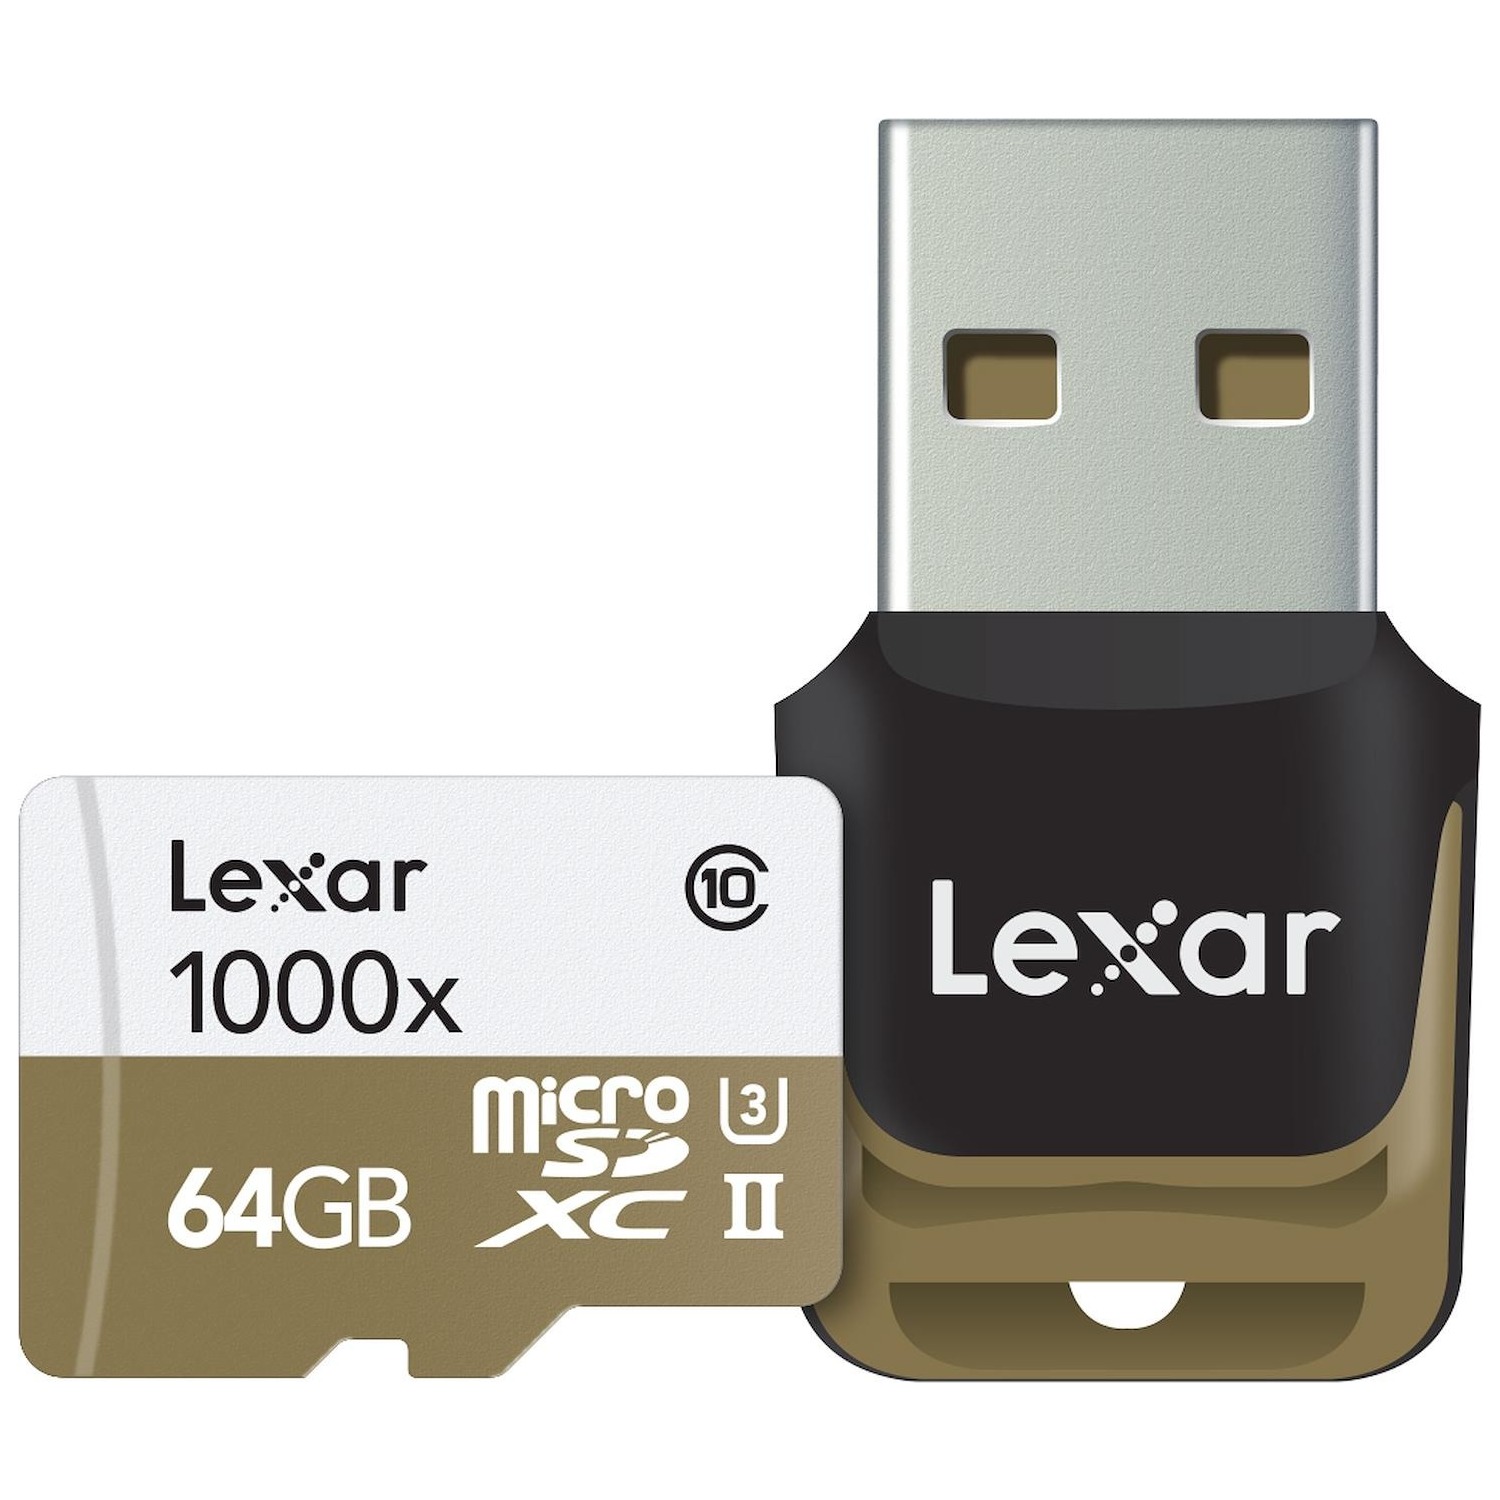 Immagine per MicroSD Lexar 64GB 1000X CL.10 da DIMOStore